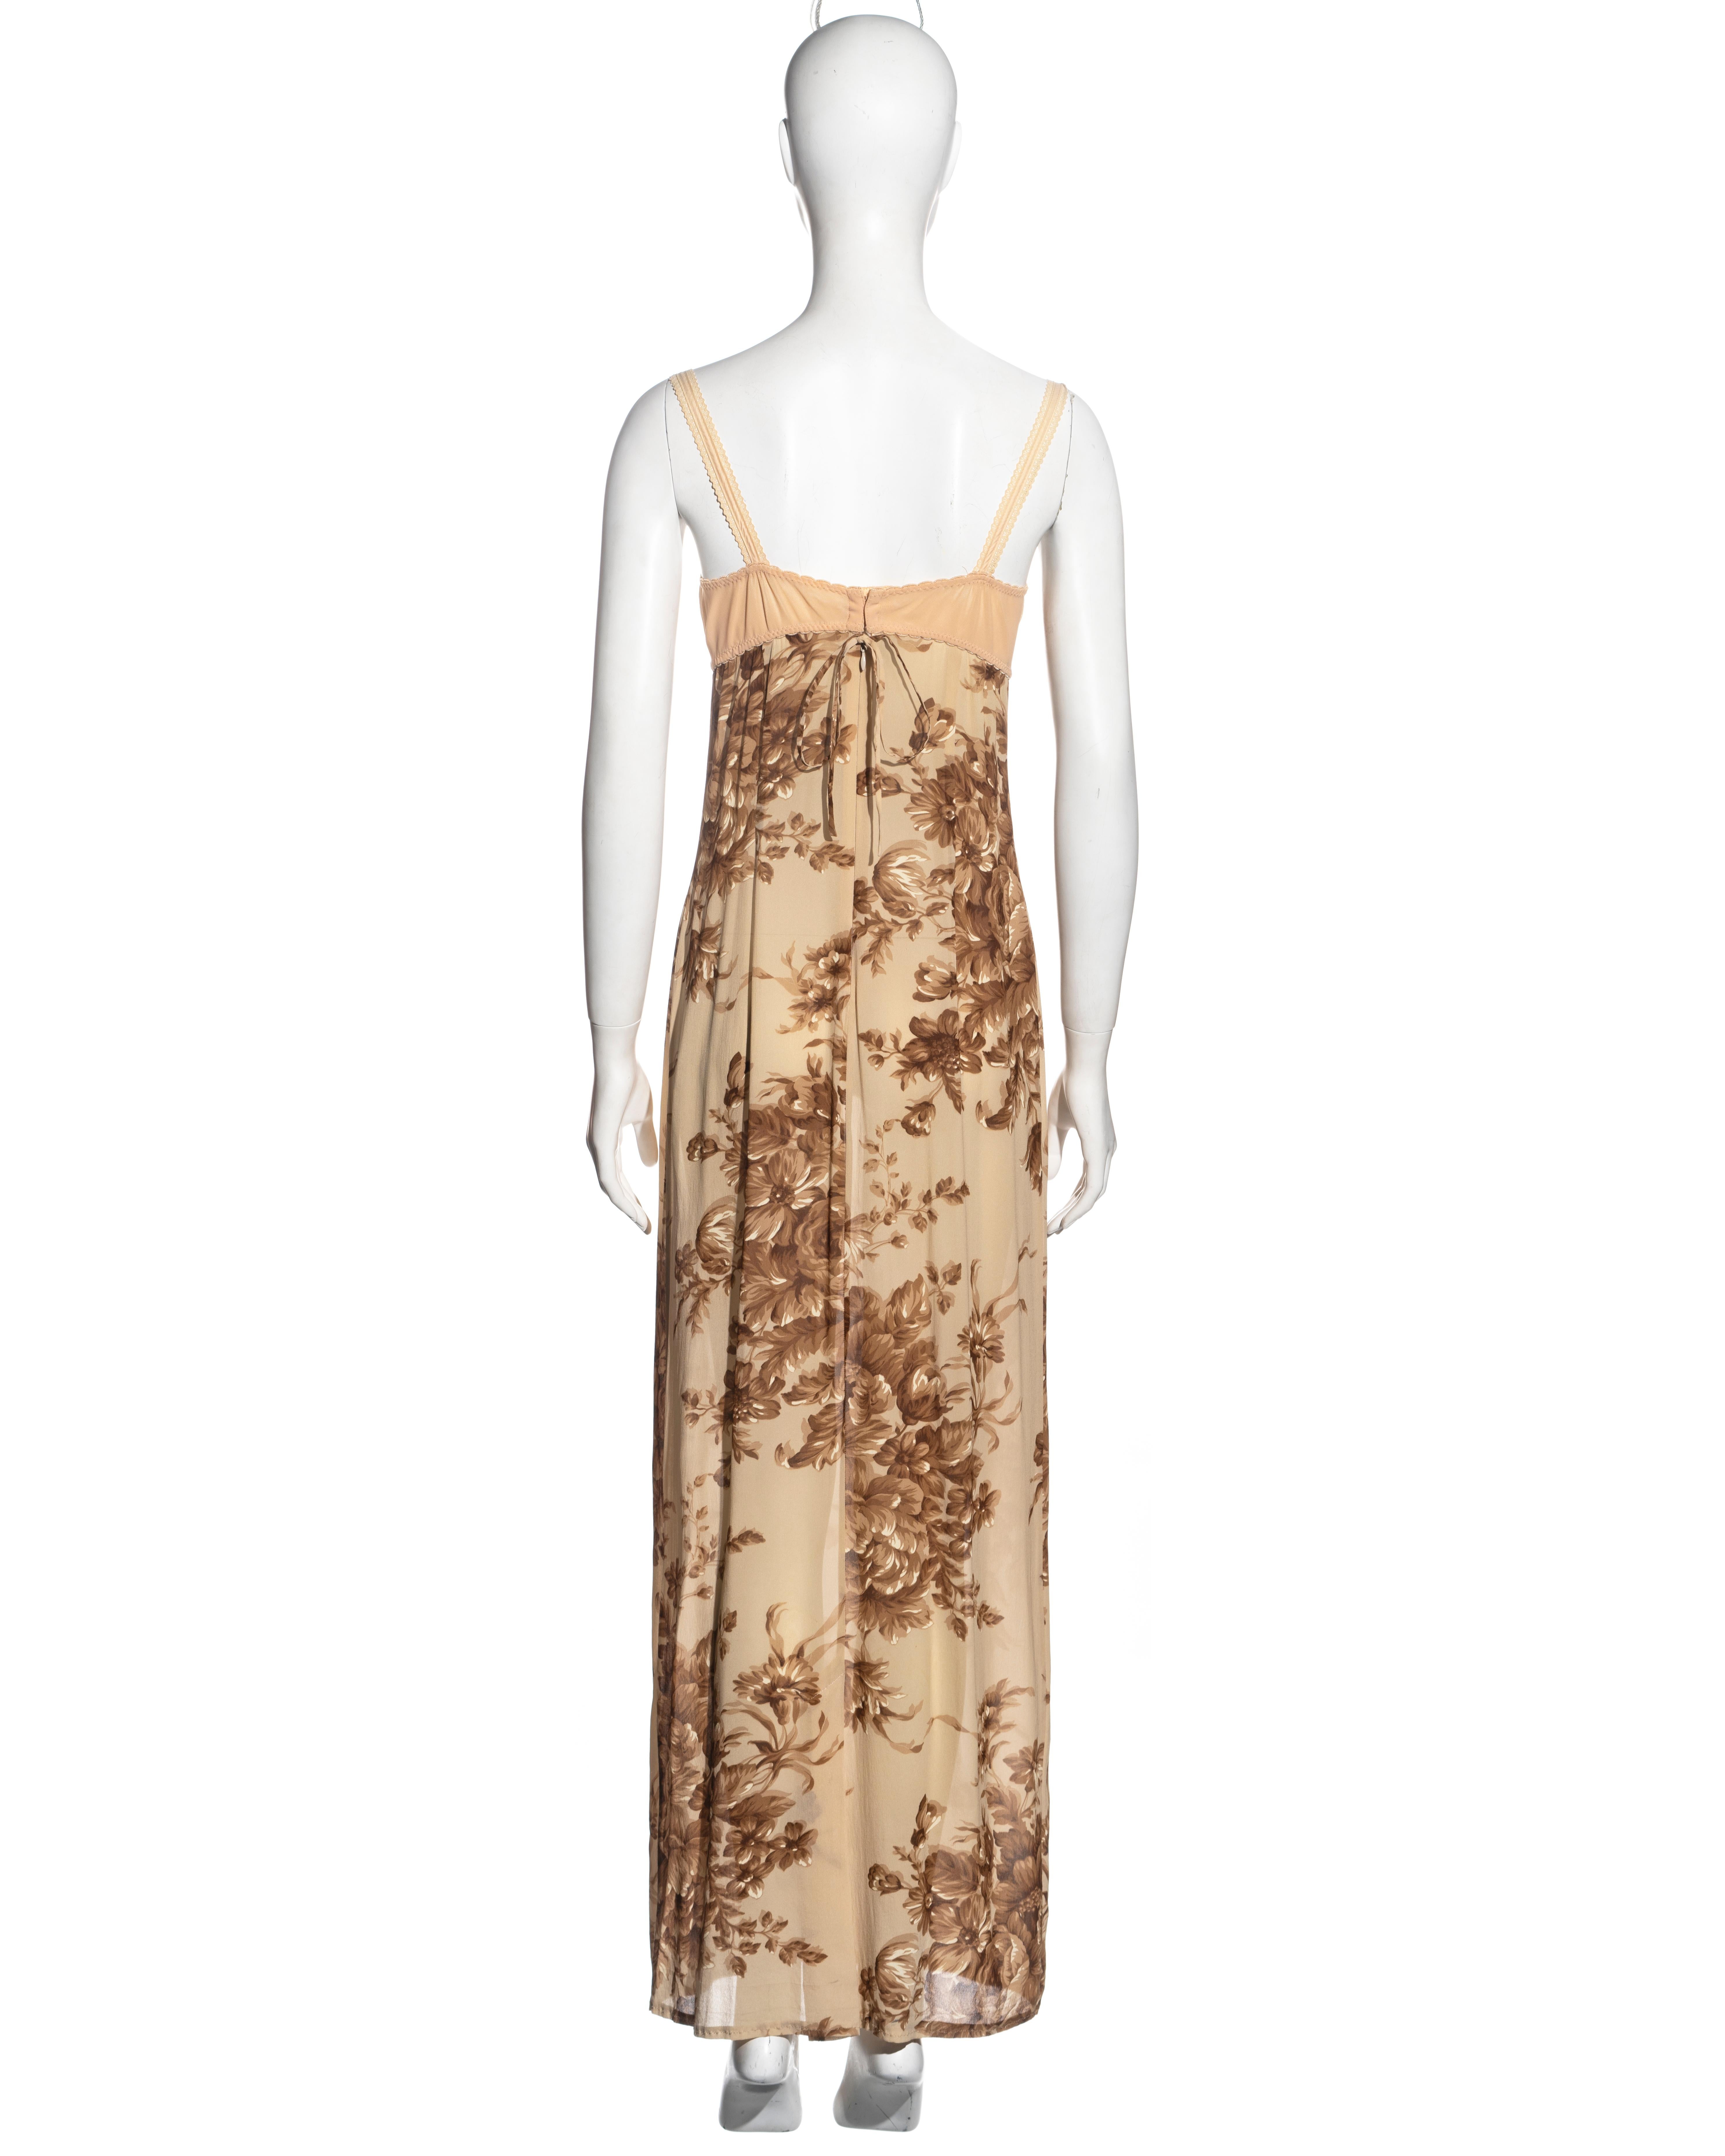 Dolce & Gabbana cream floral silk maxi dress with integrated bra, ss 1997 1